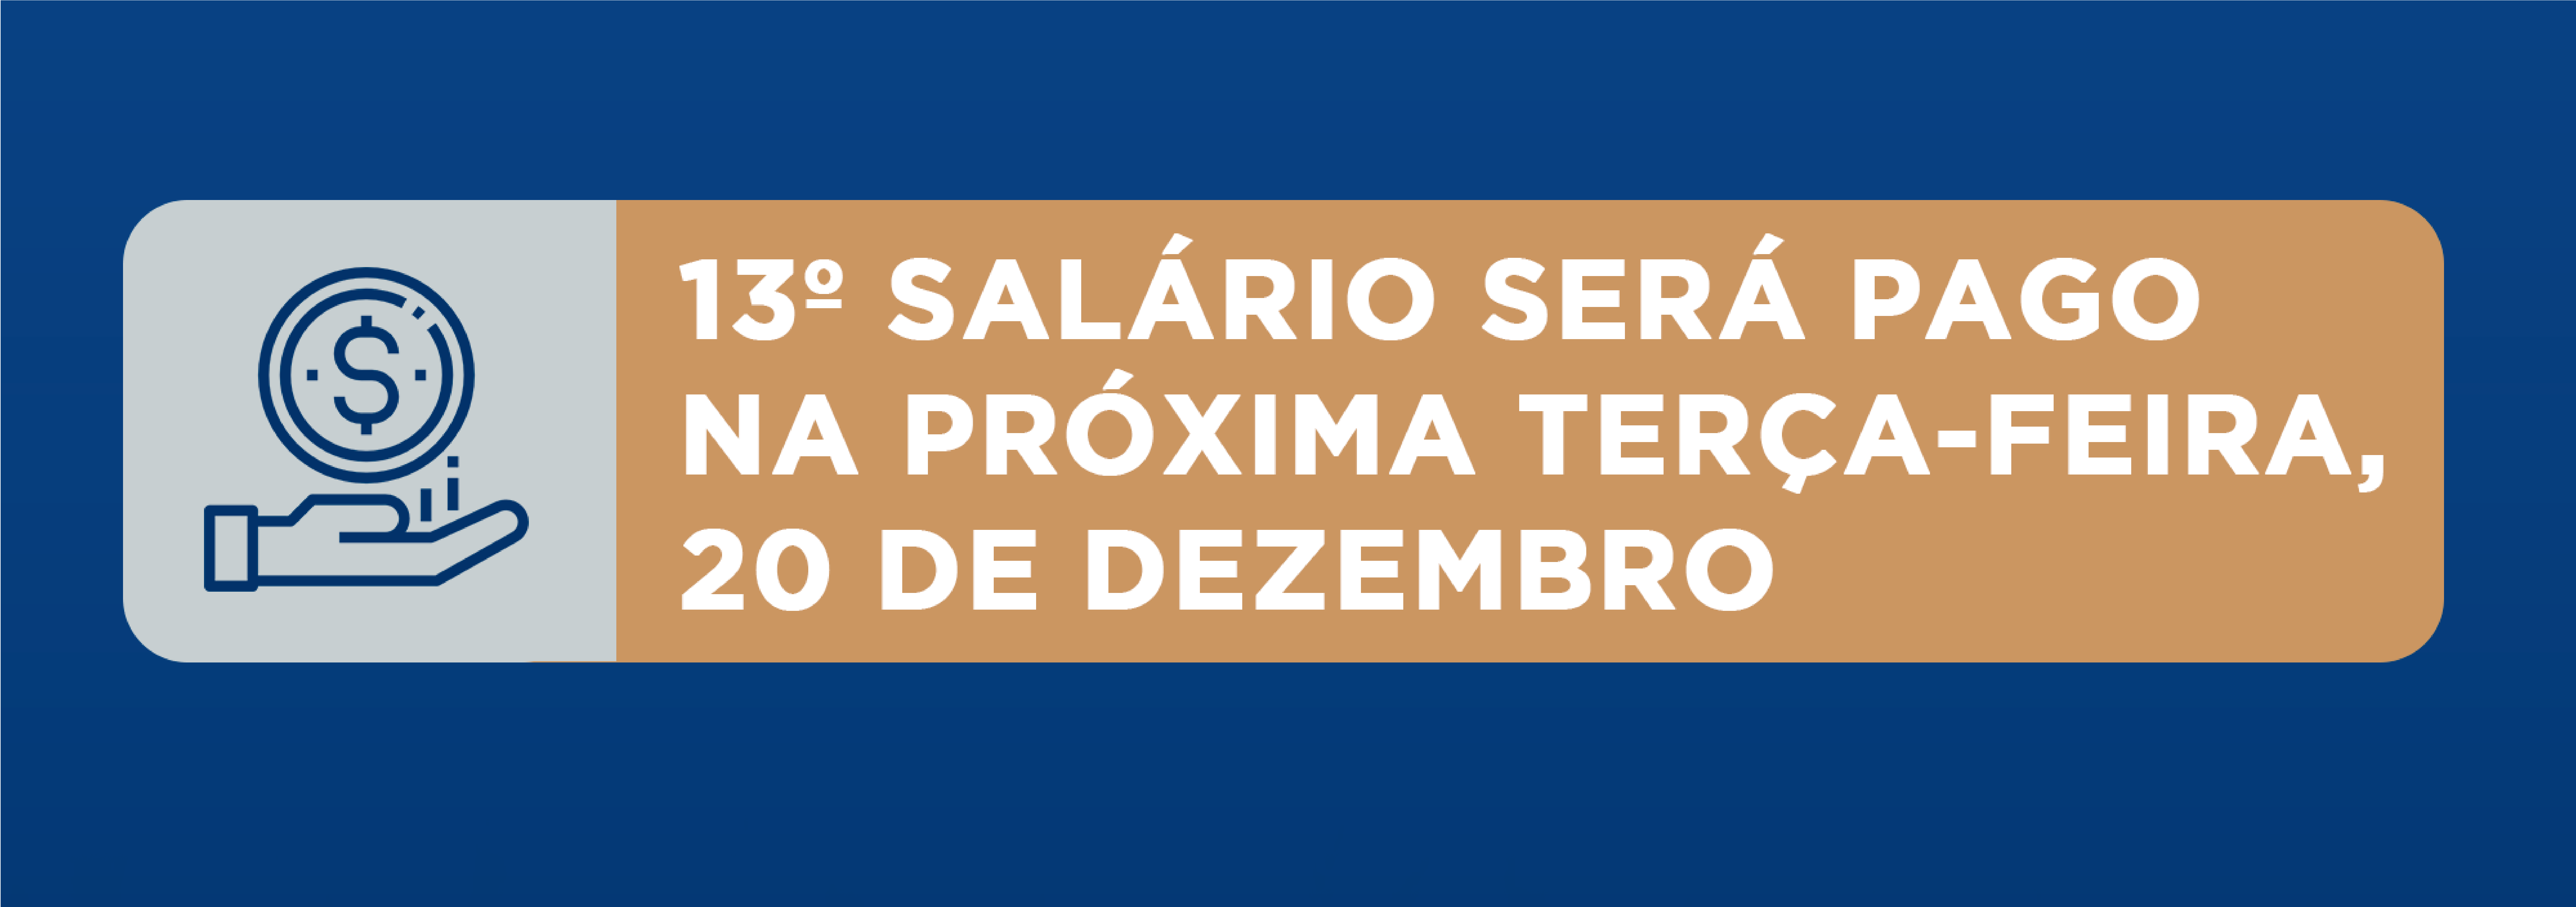 Prefeitura de Teresópolis vai liberar o 13º salário na próxima terça-feira,  20/12 - Prefeitura de Teresópolis